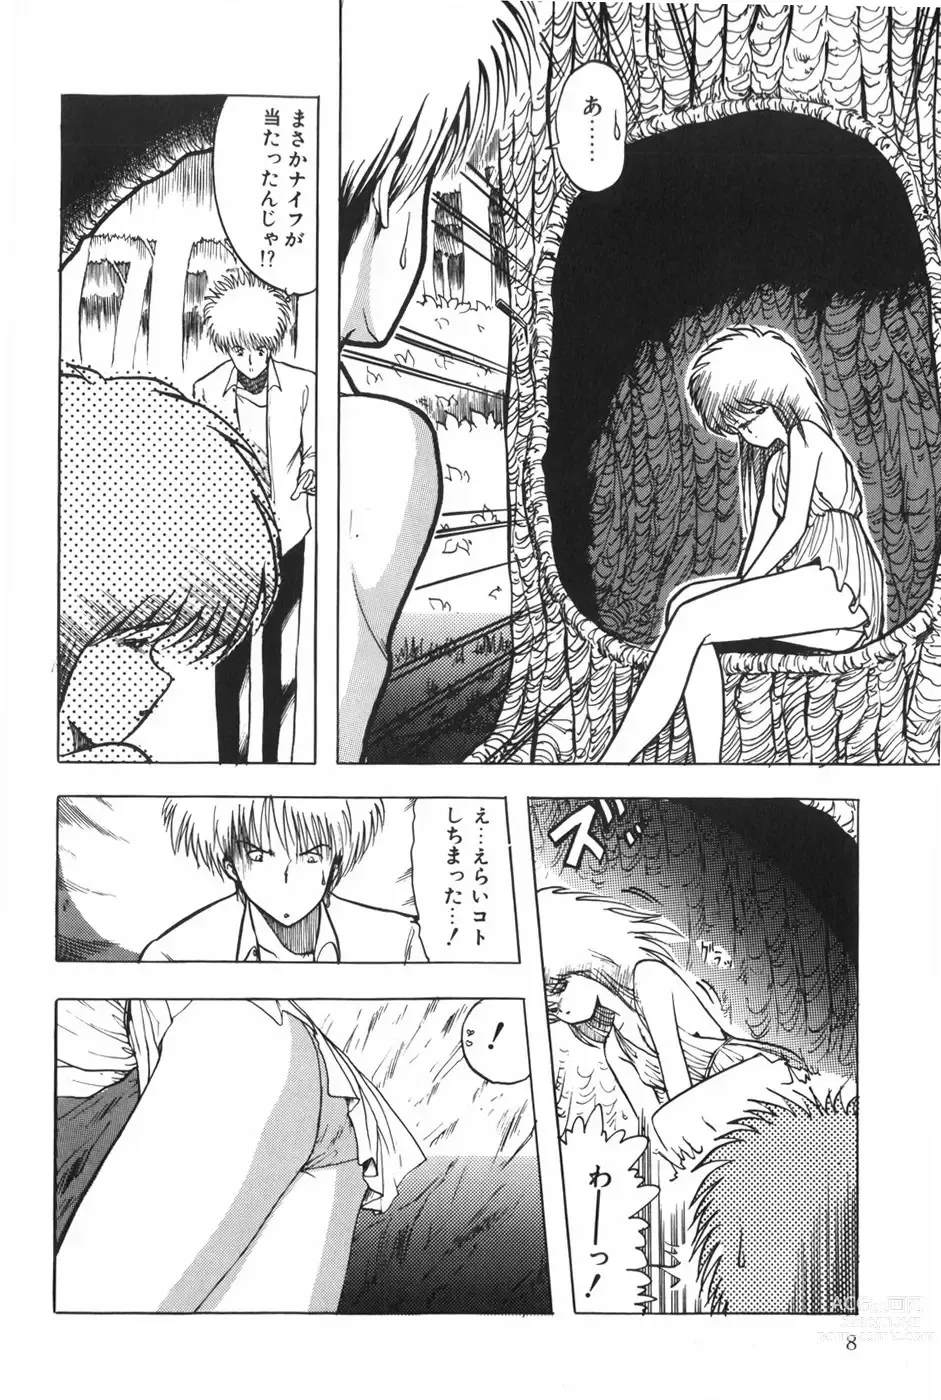 Page 14 of manga POSSESSION